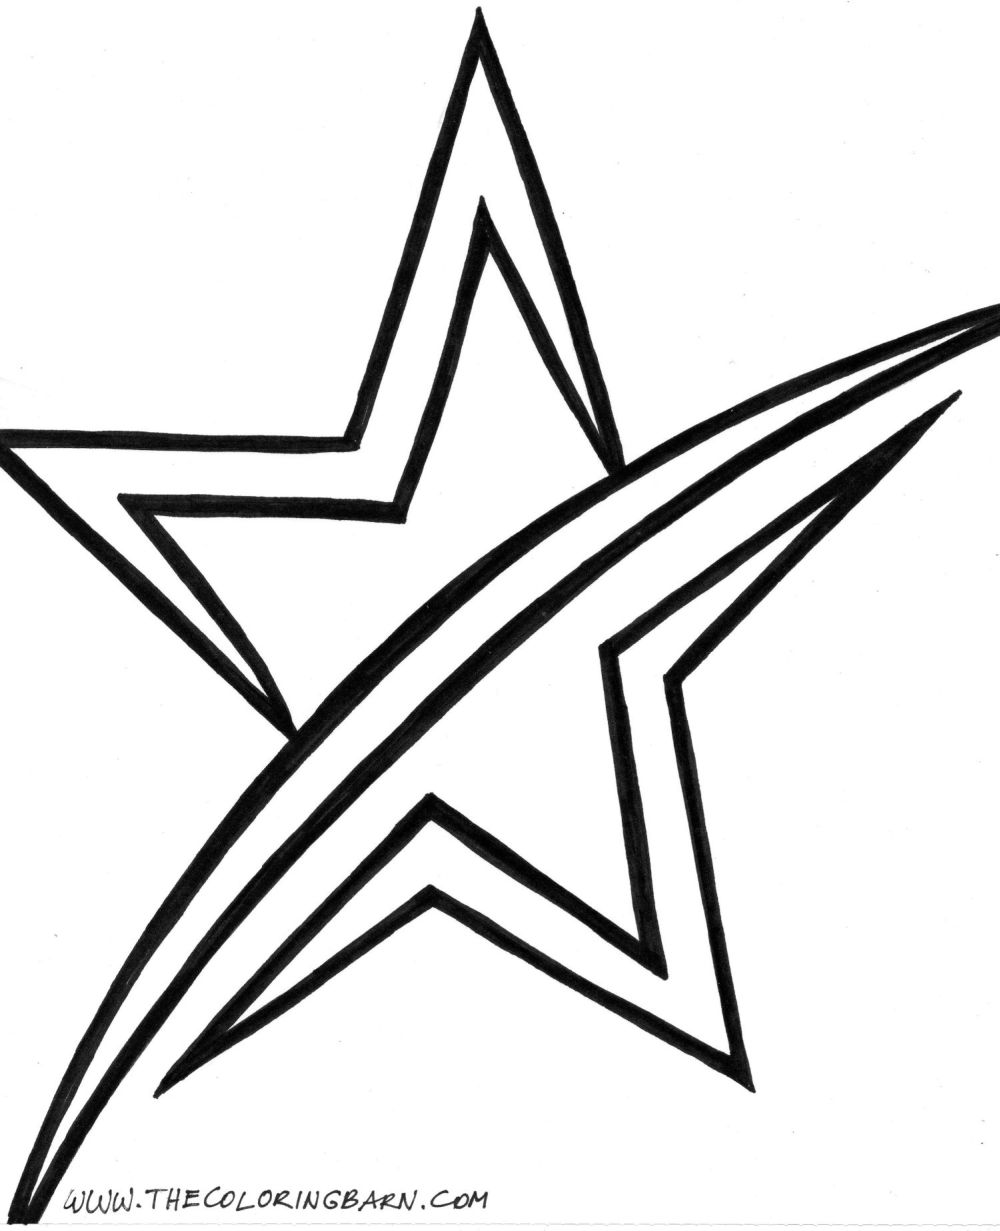 Printable Star Airbrush Template - NextInvitation Templates